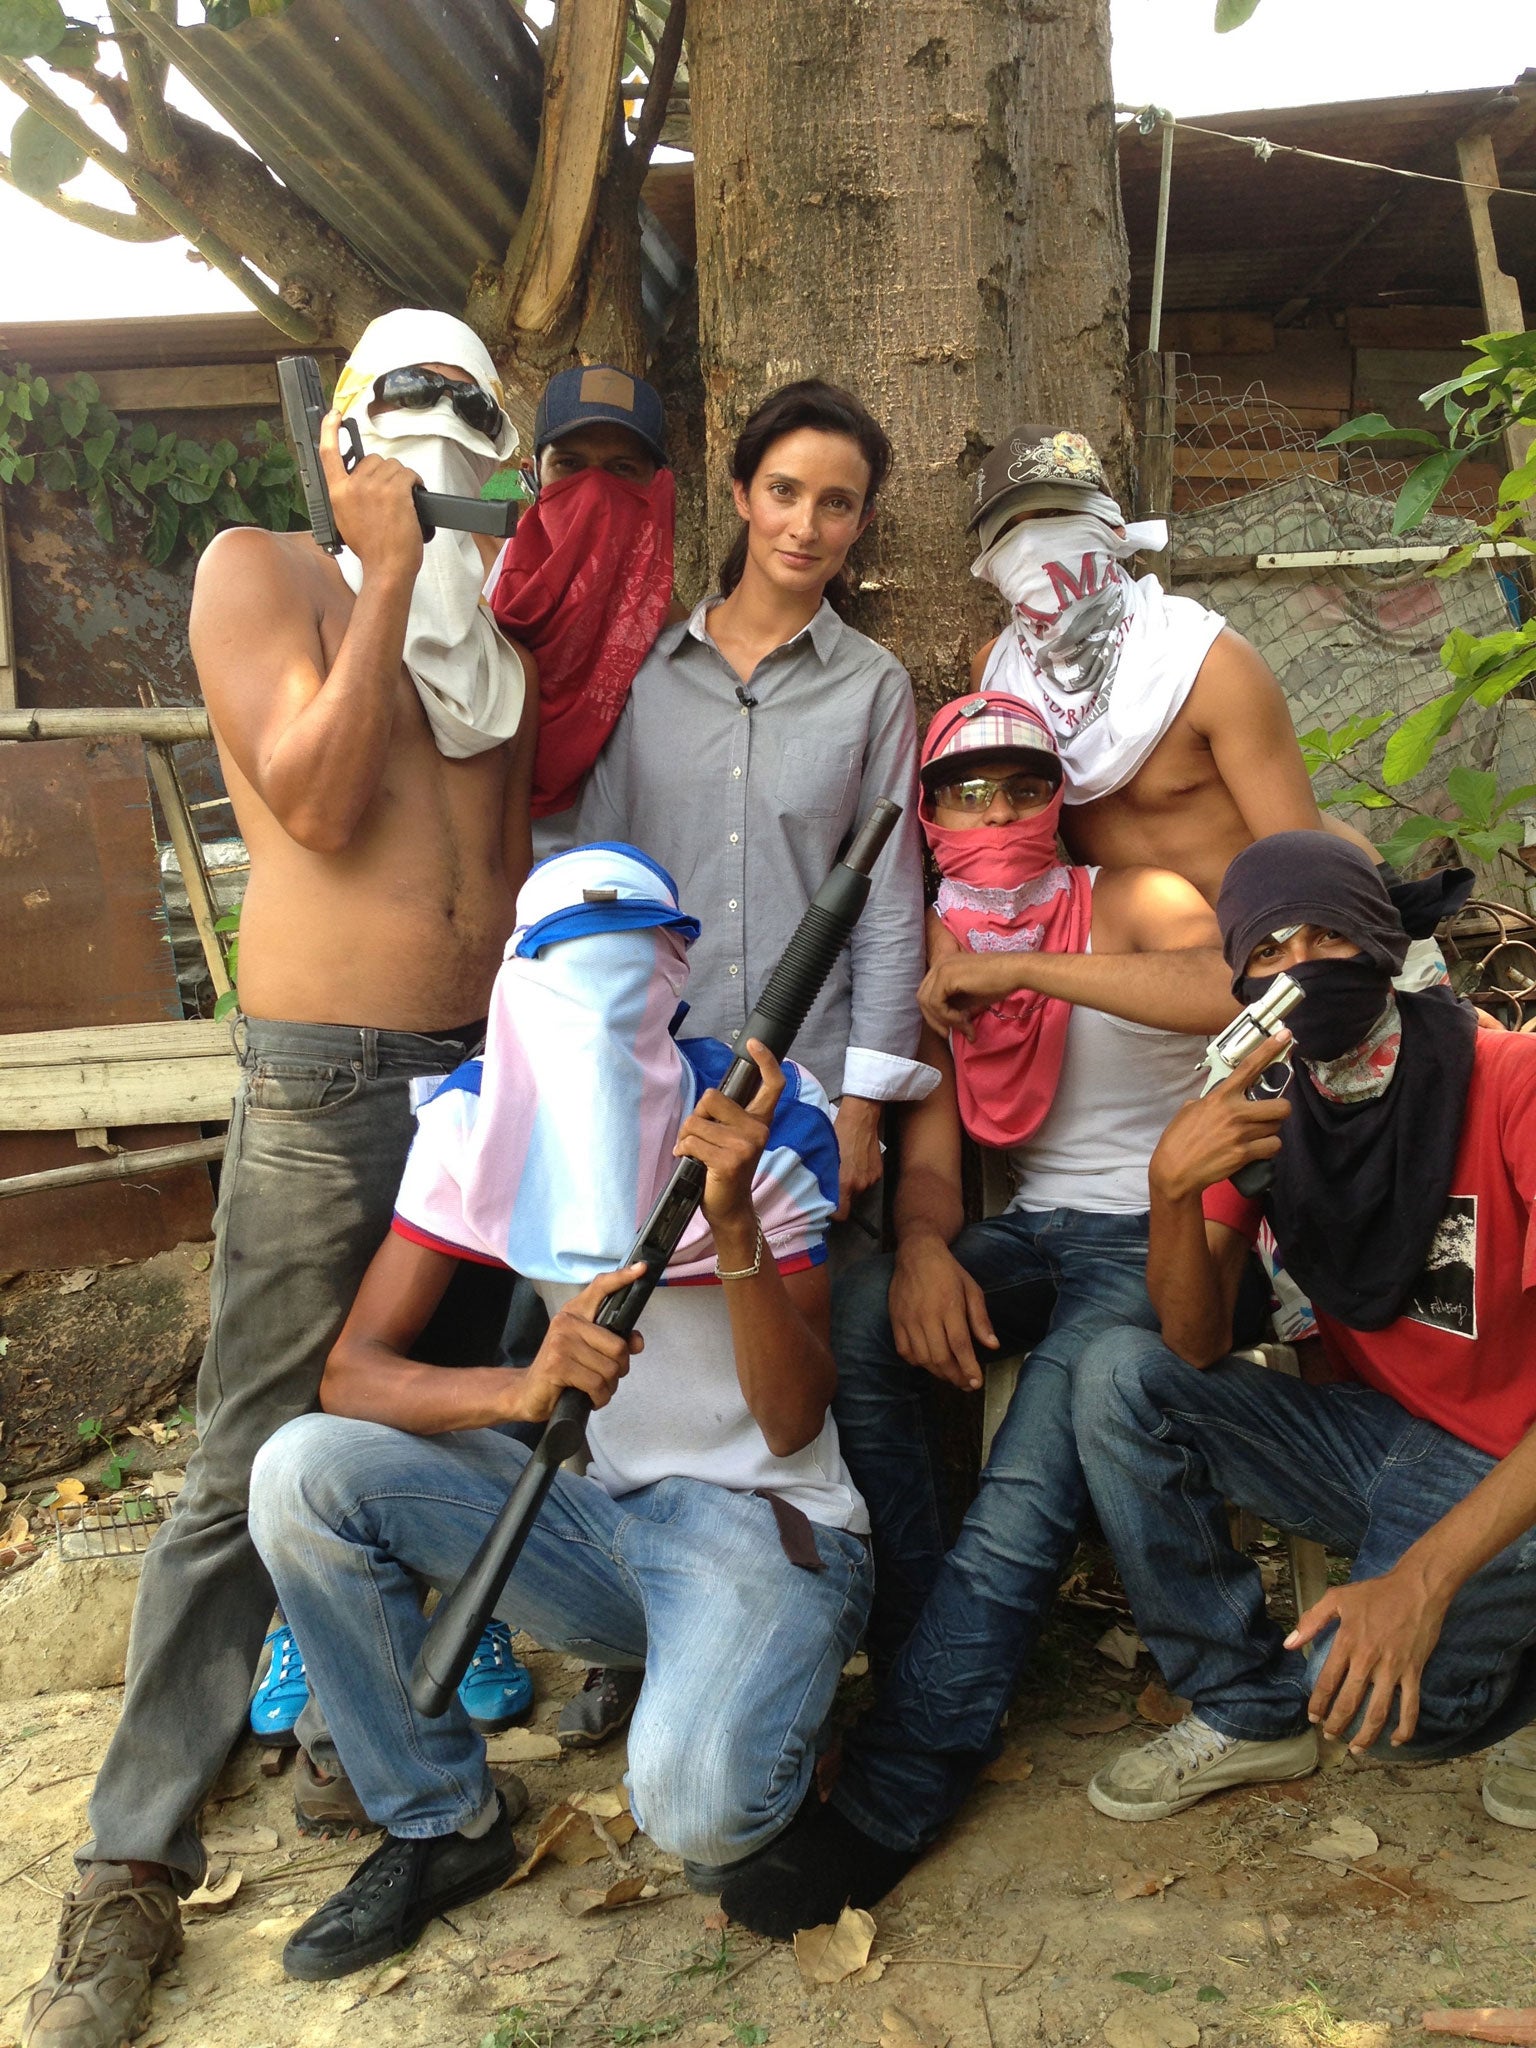 Kiki King interviews a kidnapping gang from Caracas the capital of Venezuela